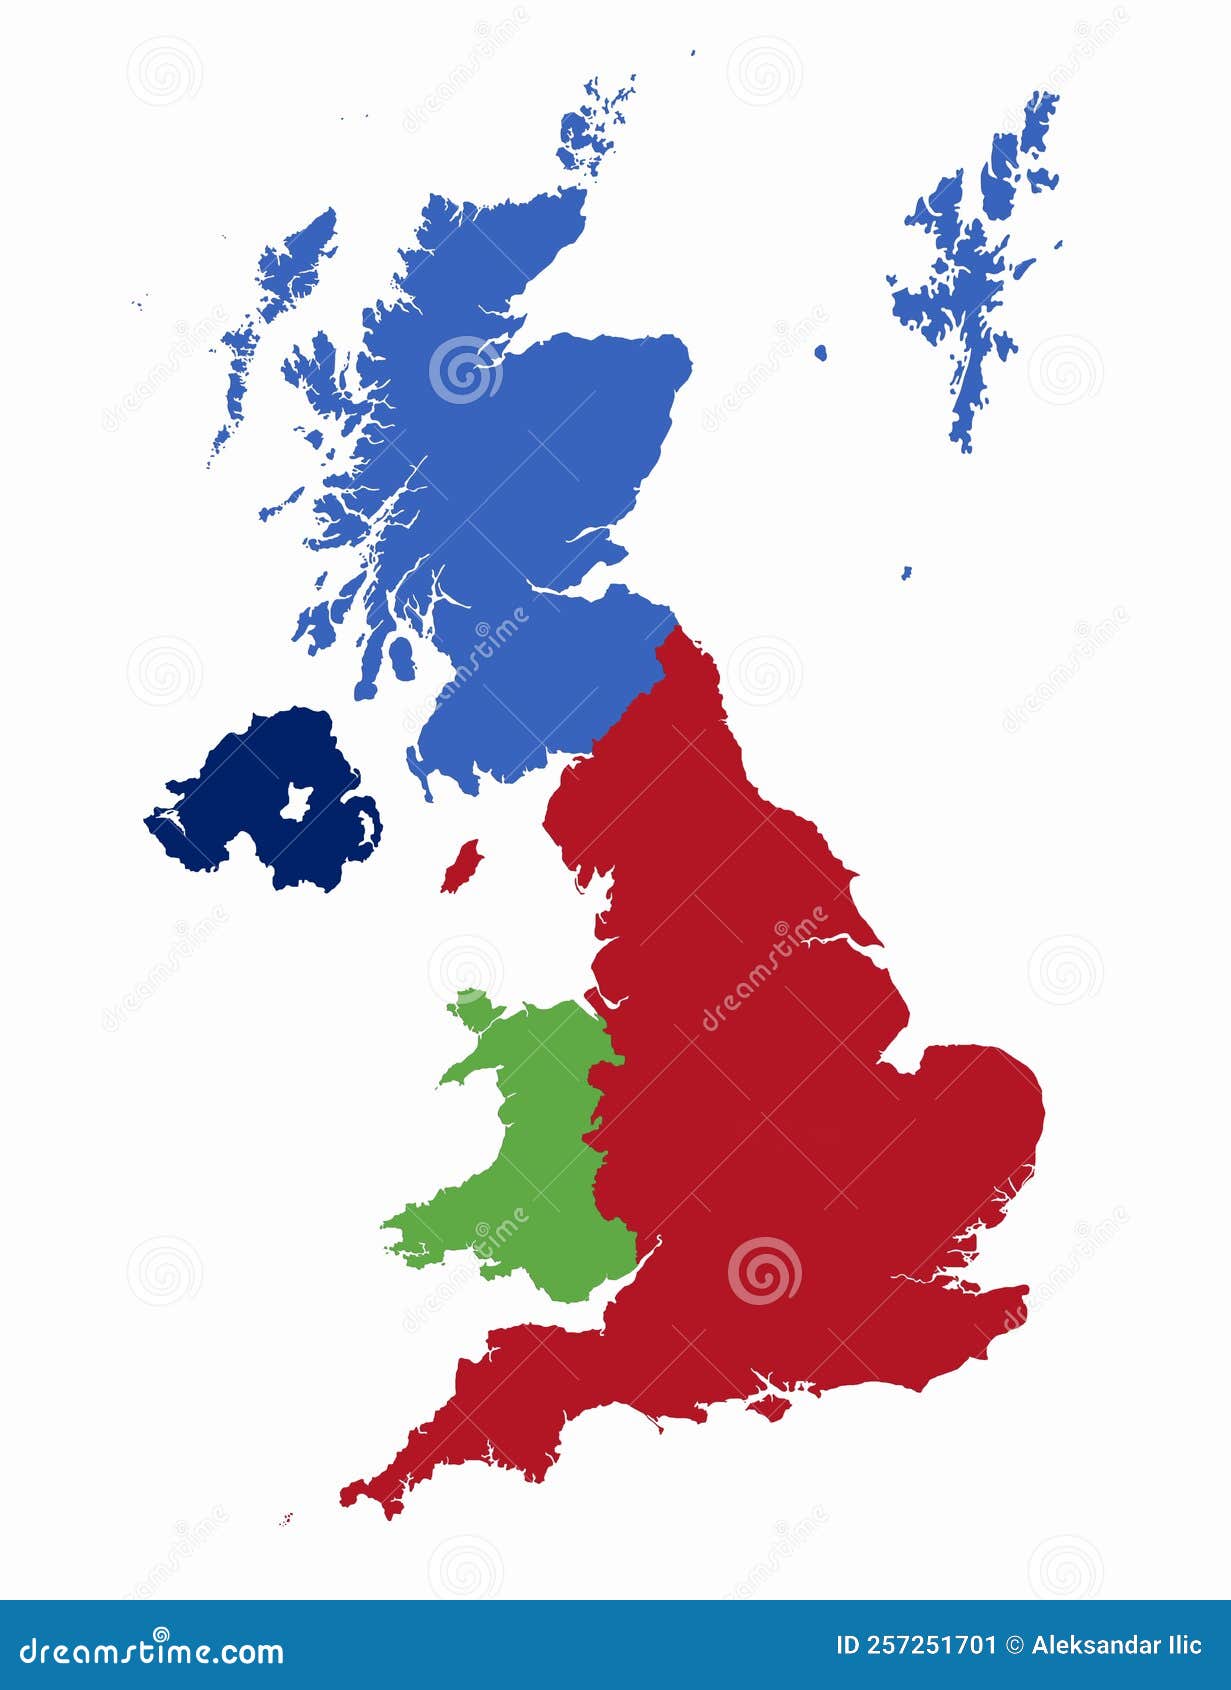 United Kingdom Map Territories England Scotland Northern Ireland Wales D Illustration 257251701 